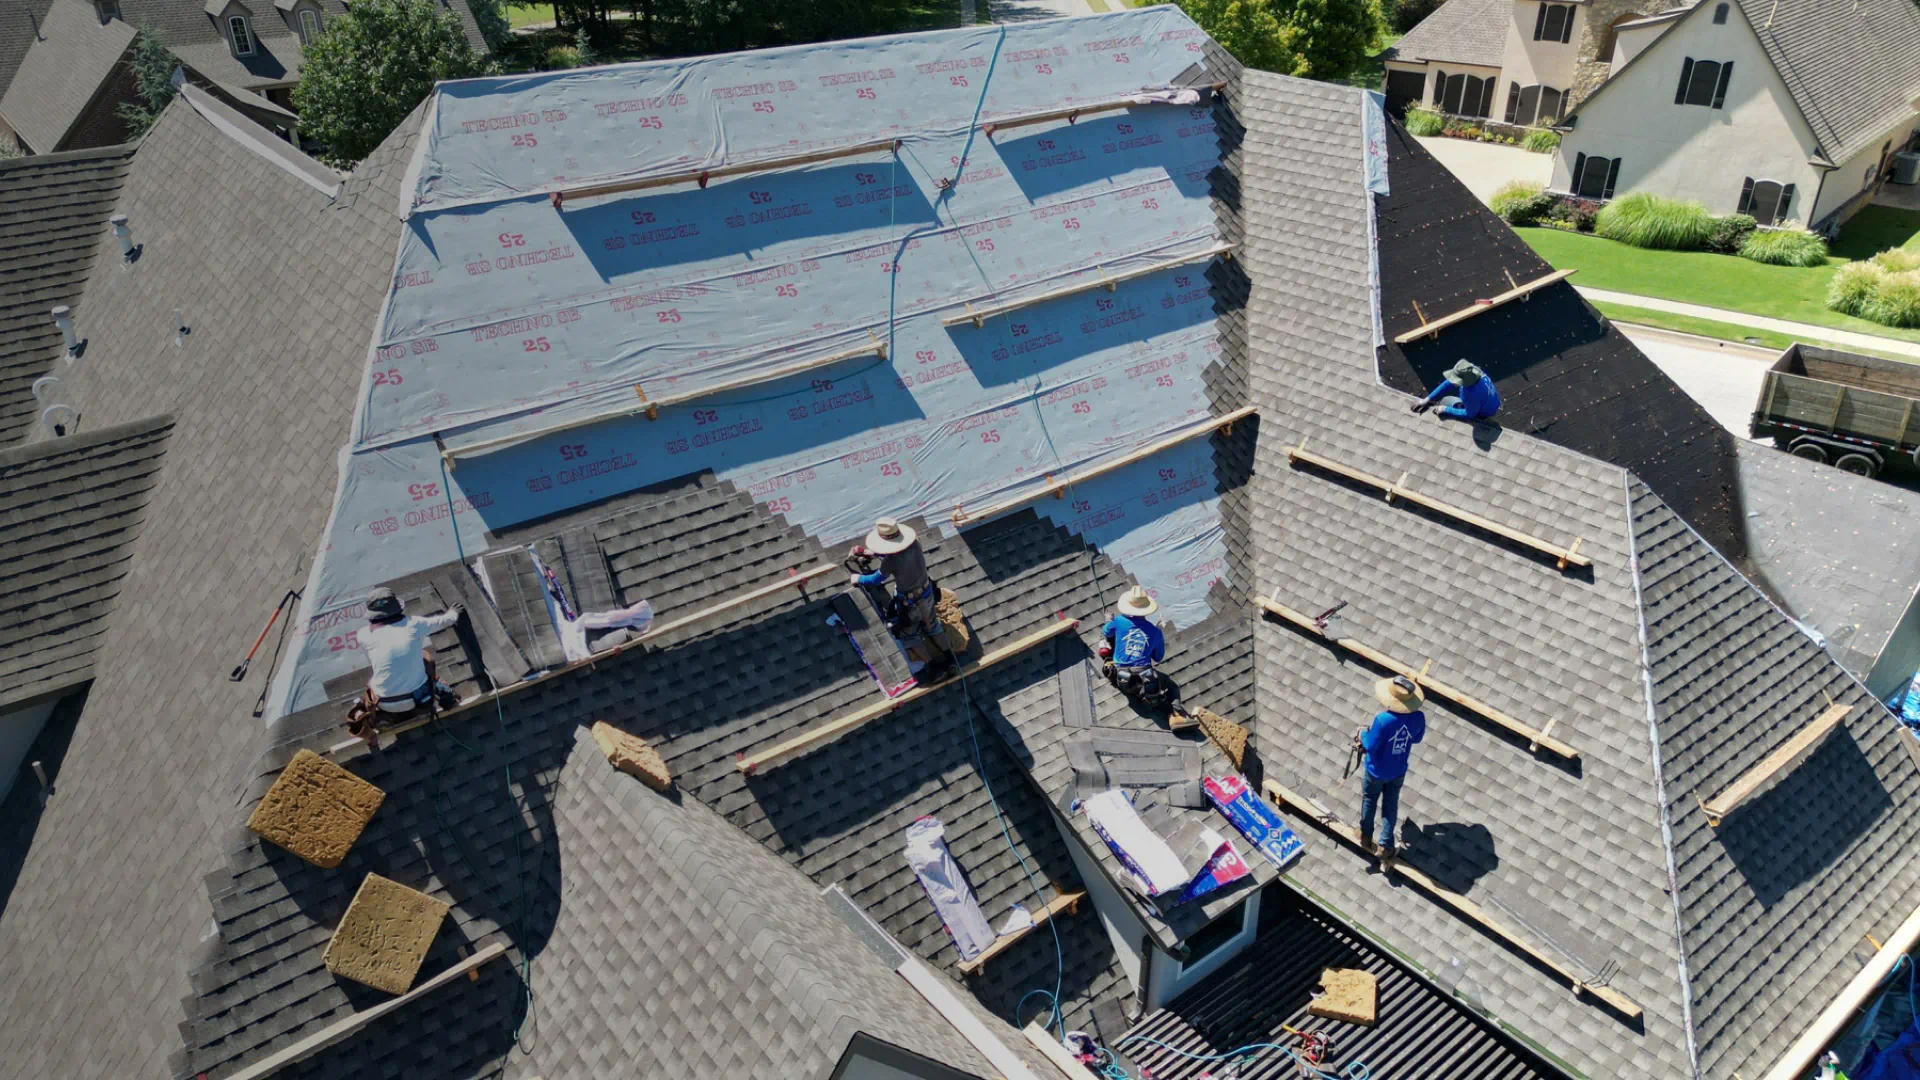 roofing service work in progress roofers installing roof asphalt shingle